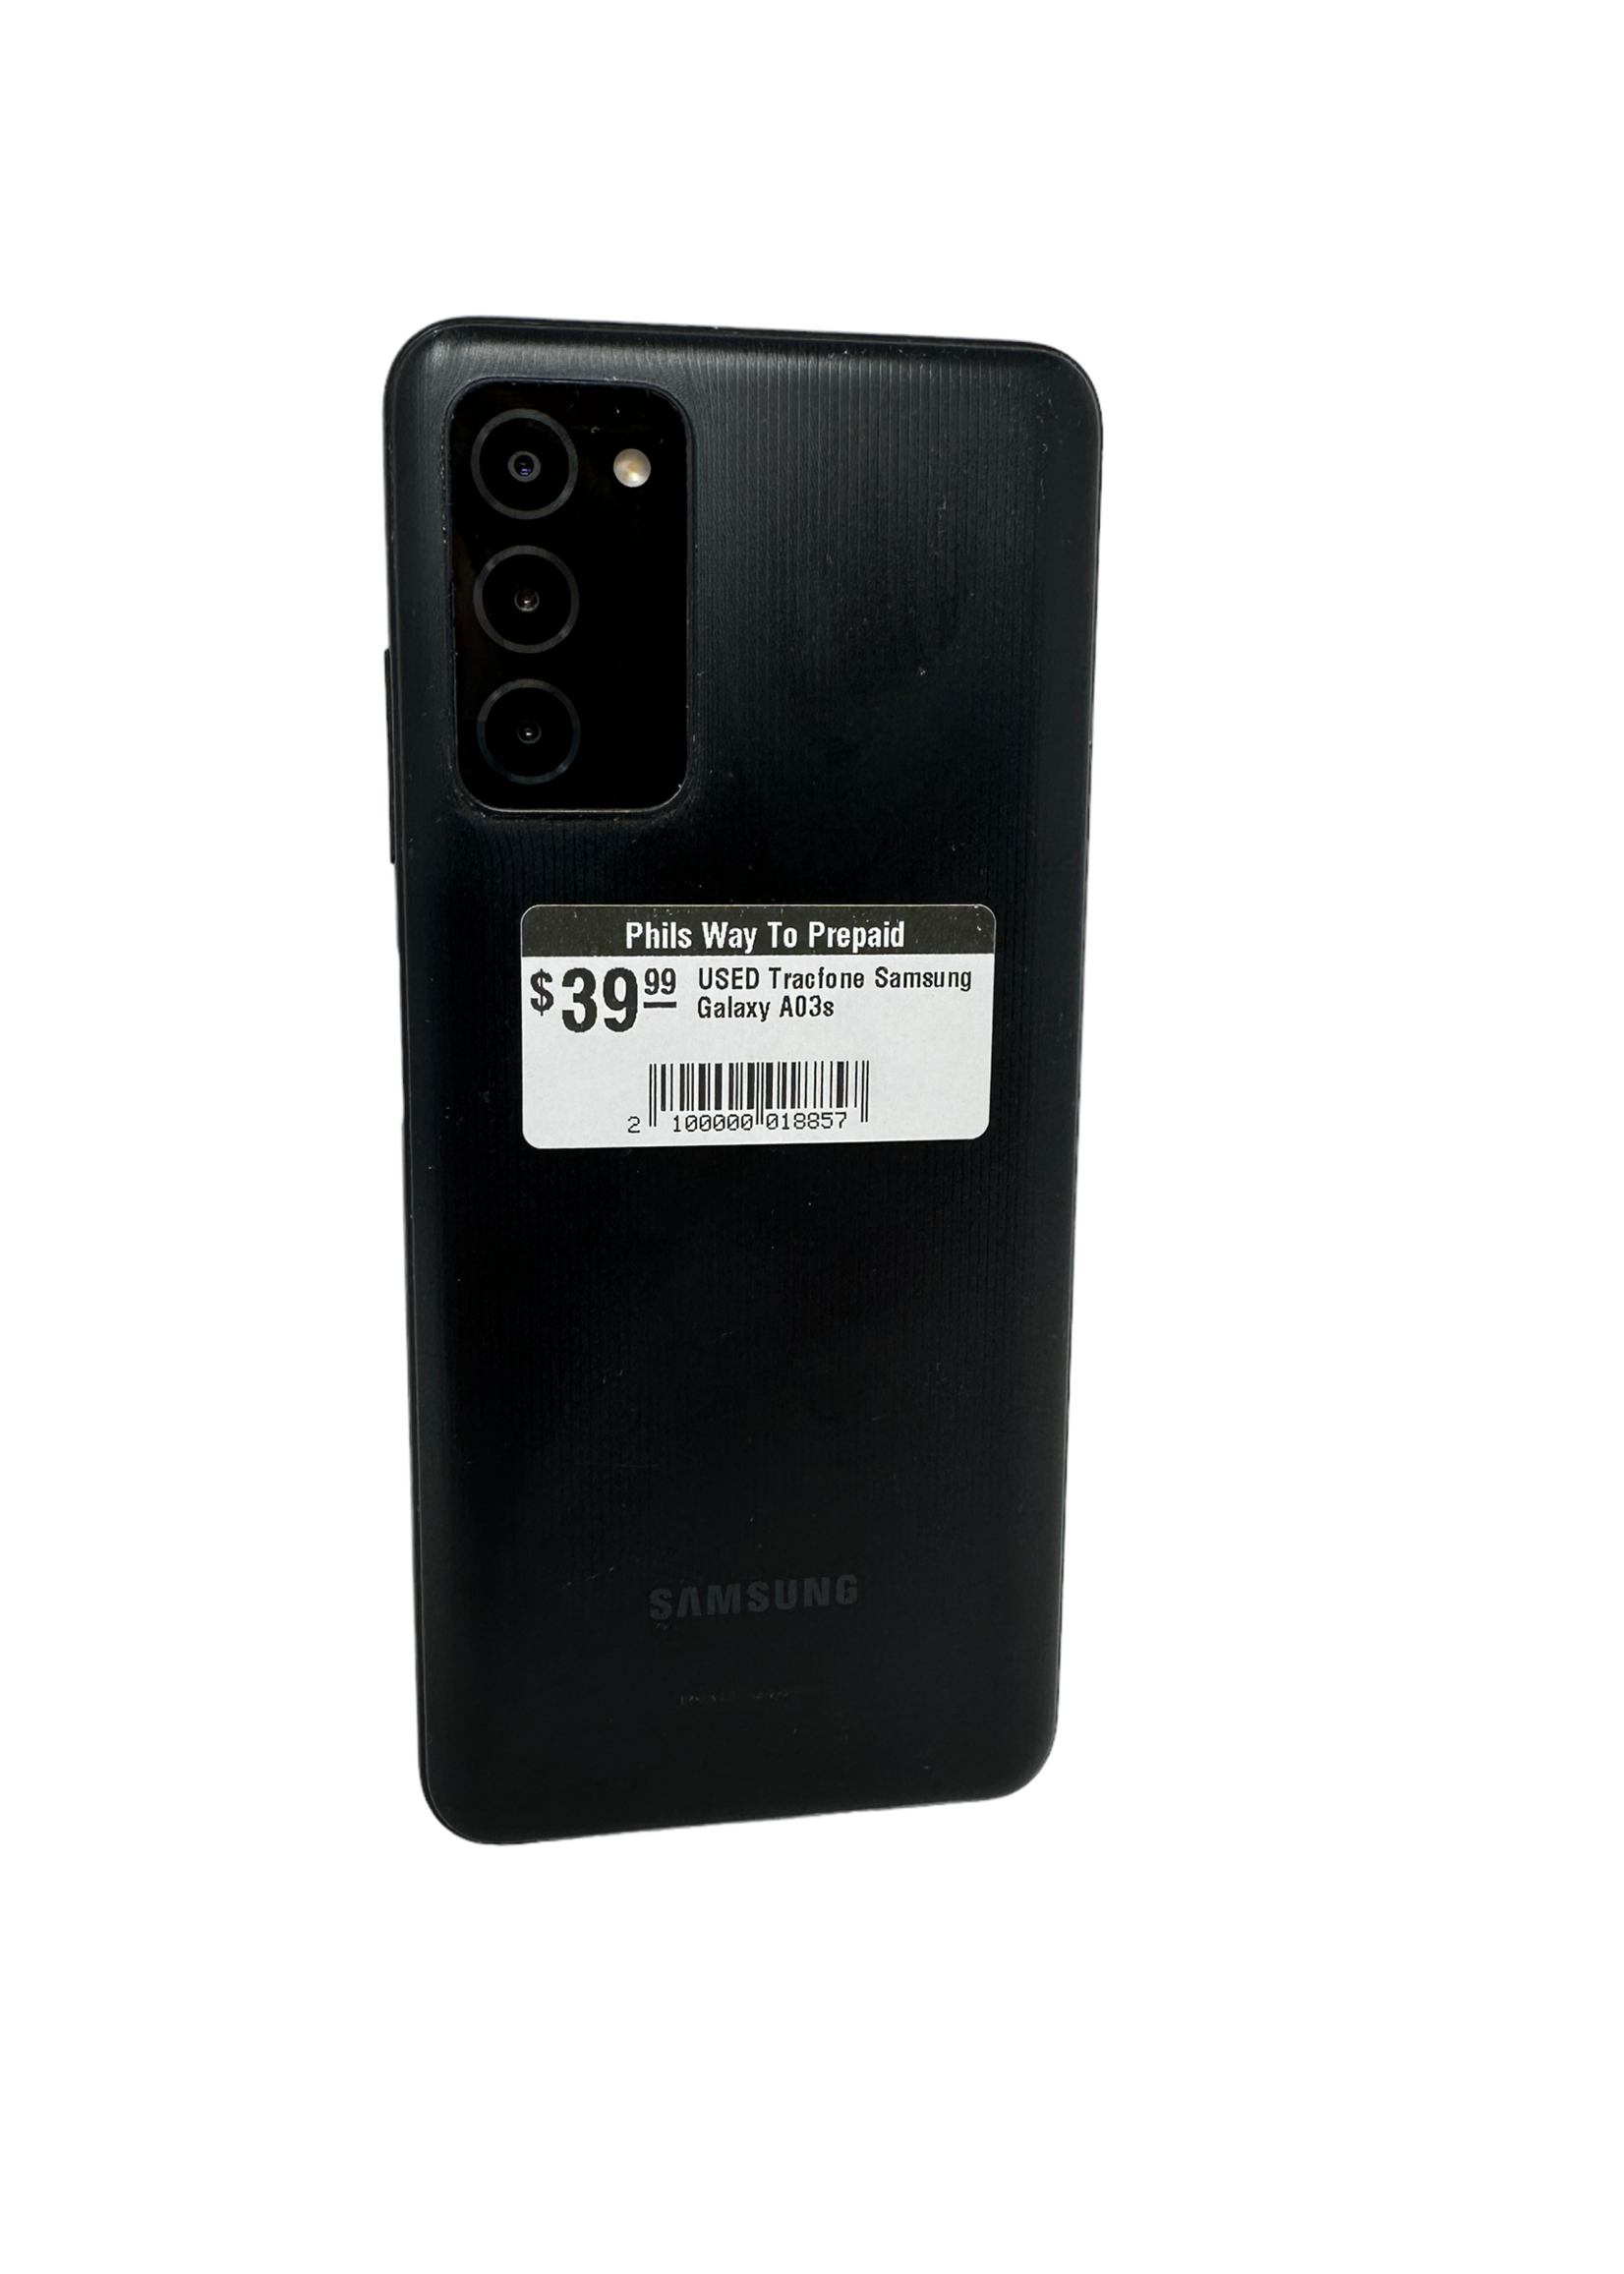 Samsung USED Tracfone Samsung Galaxy A03s